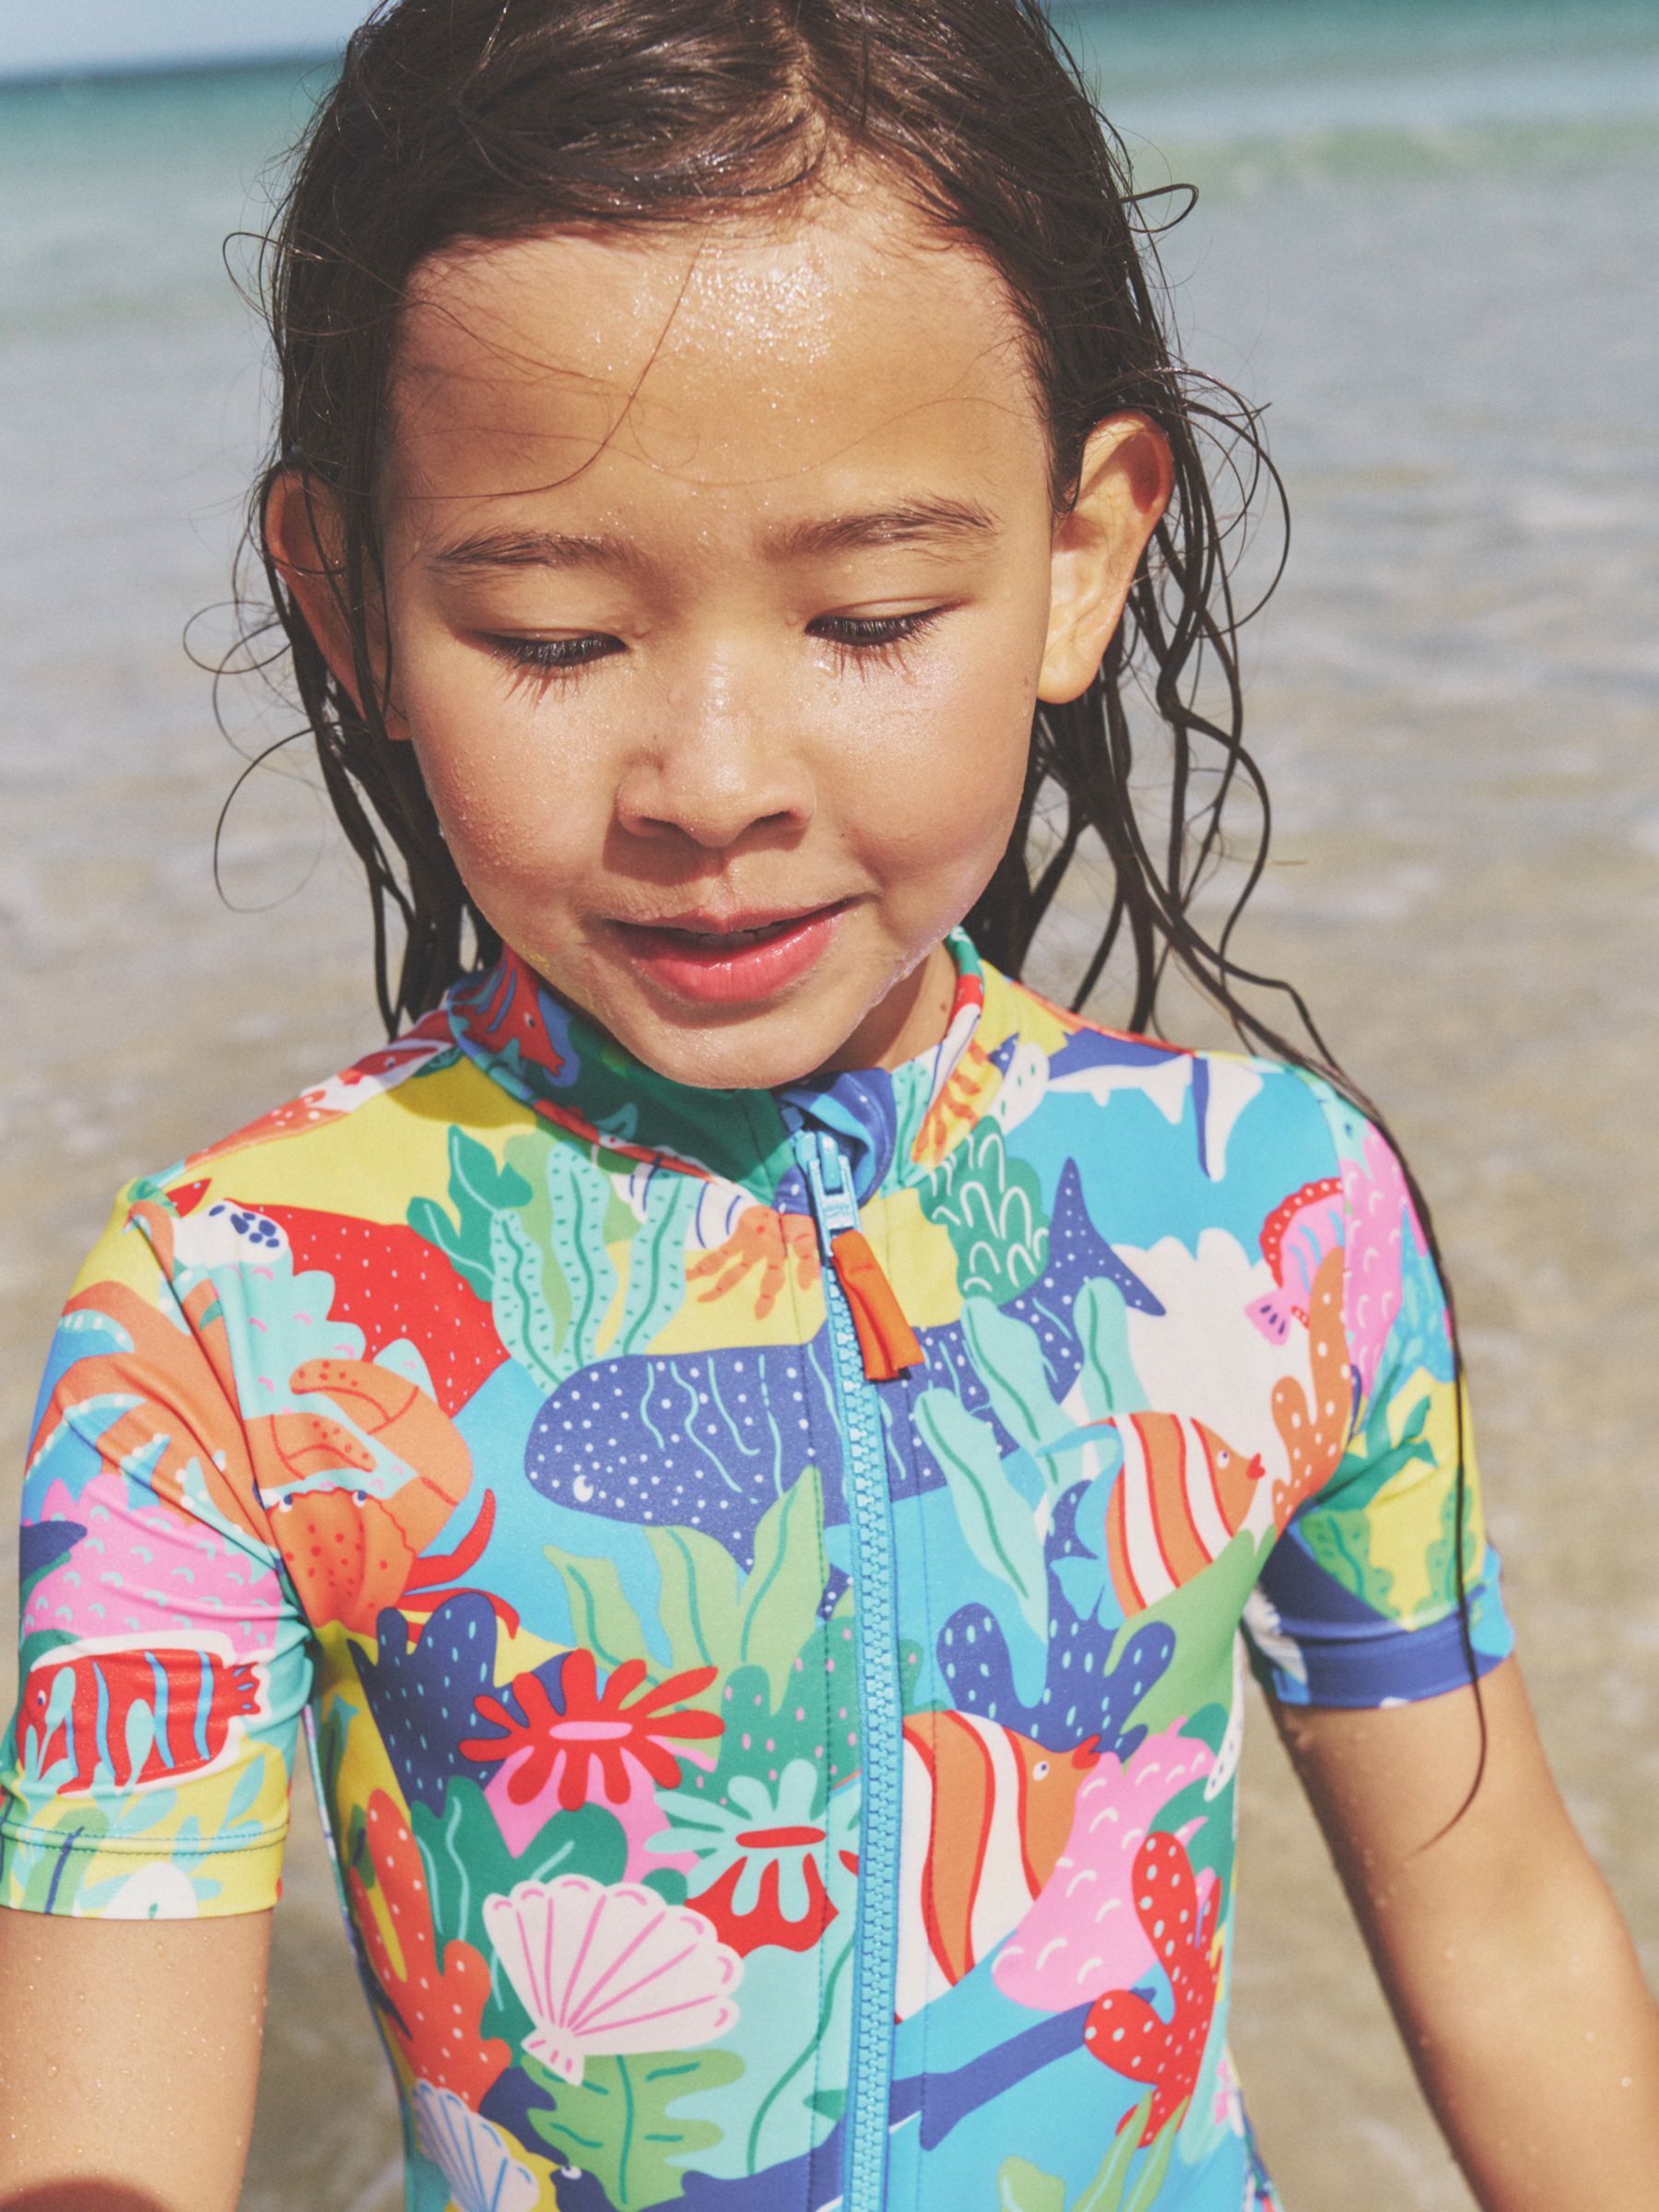 Mini Boden Kids' Rainbow Reef Print Short Sleeve High Neck Swimsuit, Multi, 2-3 years